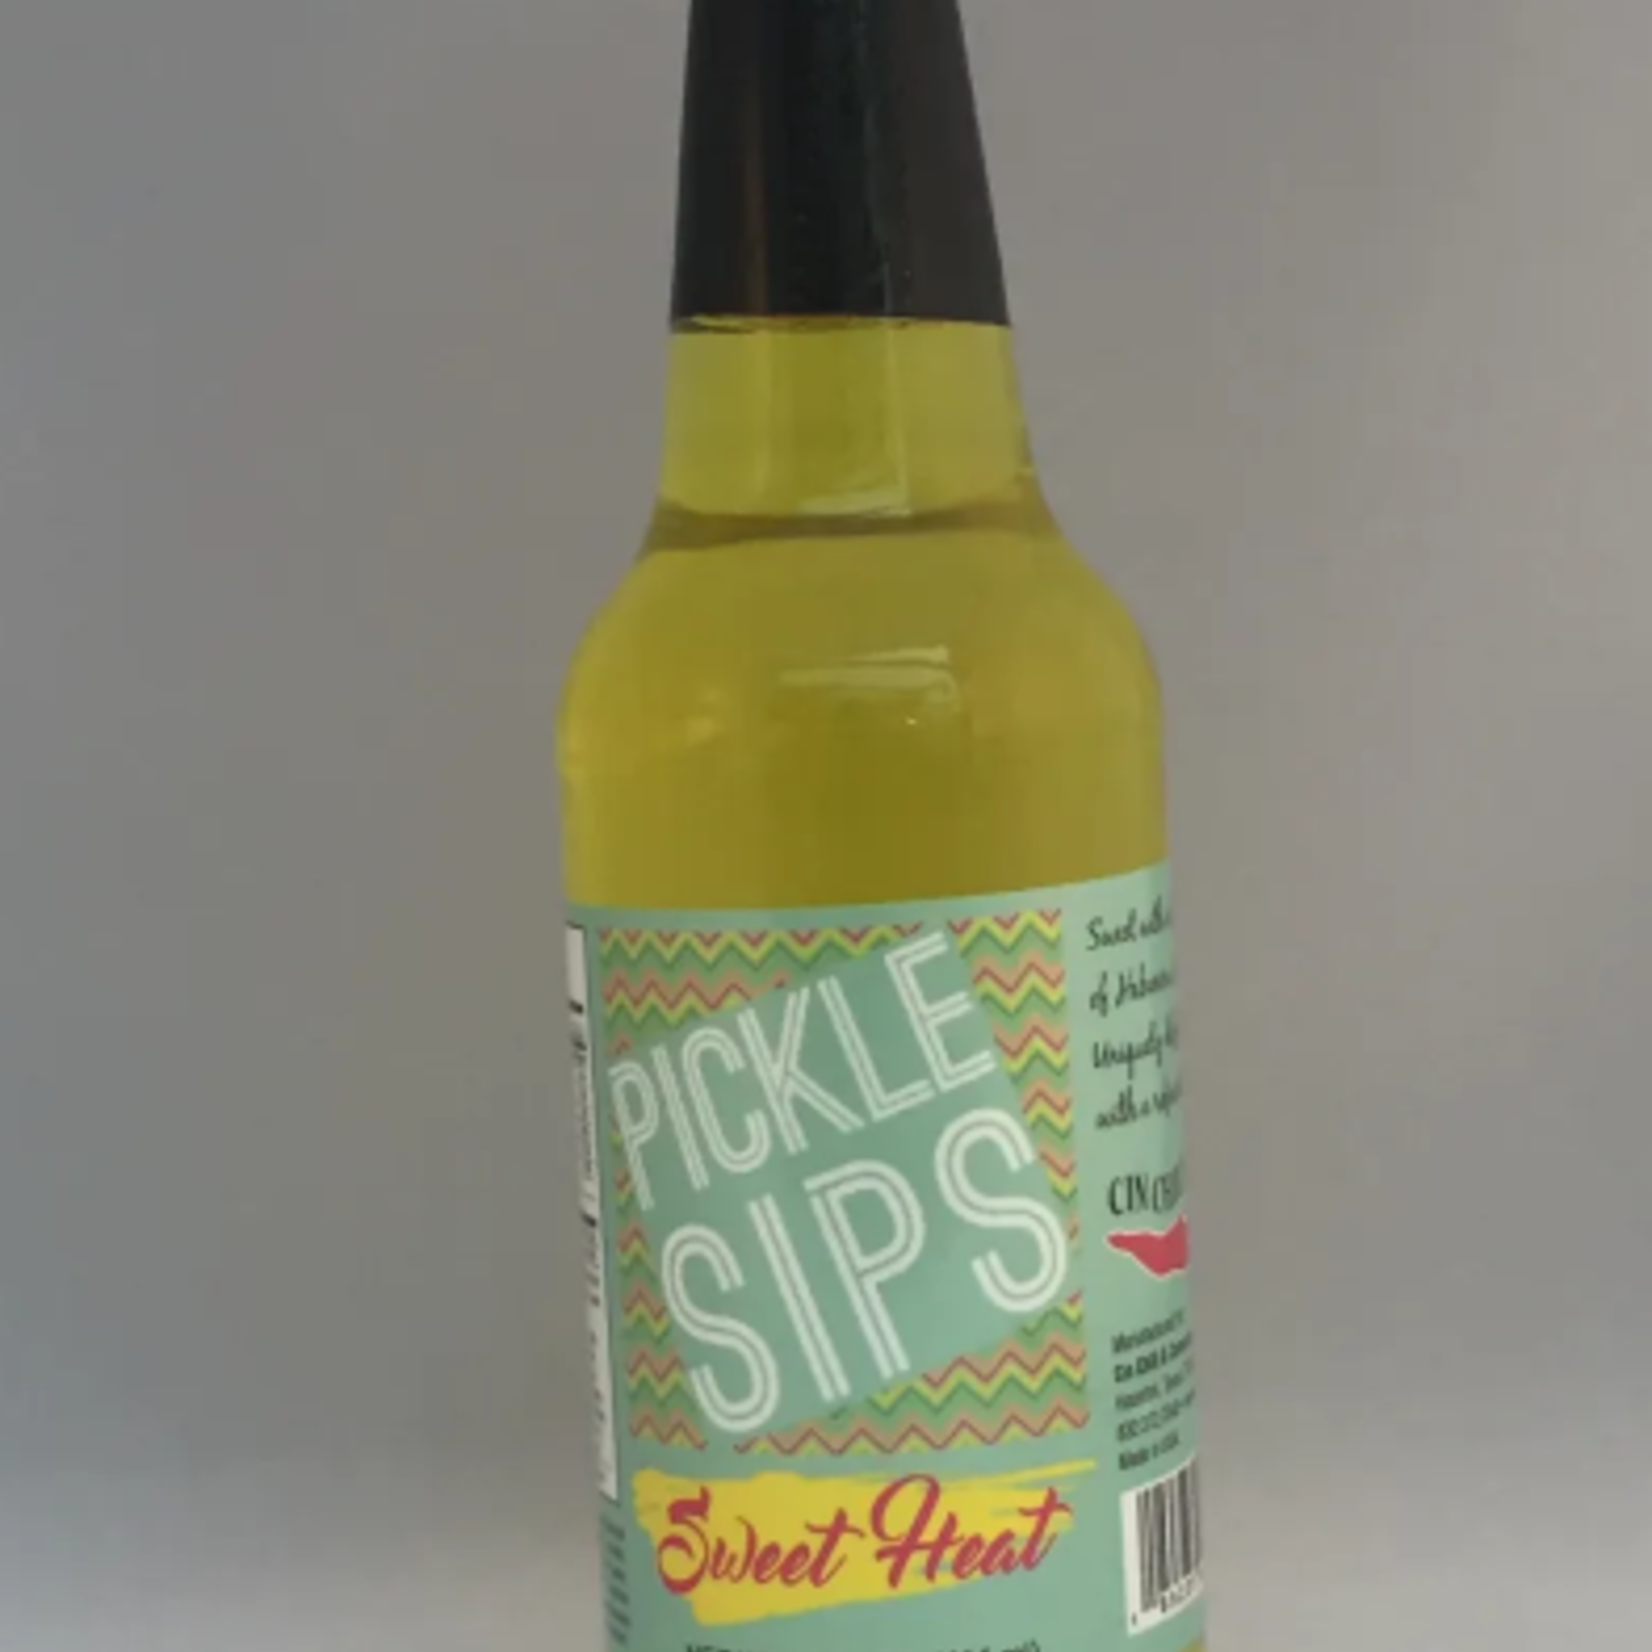 Cin Chili & Company Pickle Sips - Sweet Heat